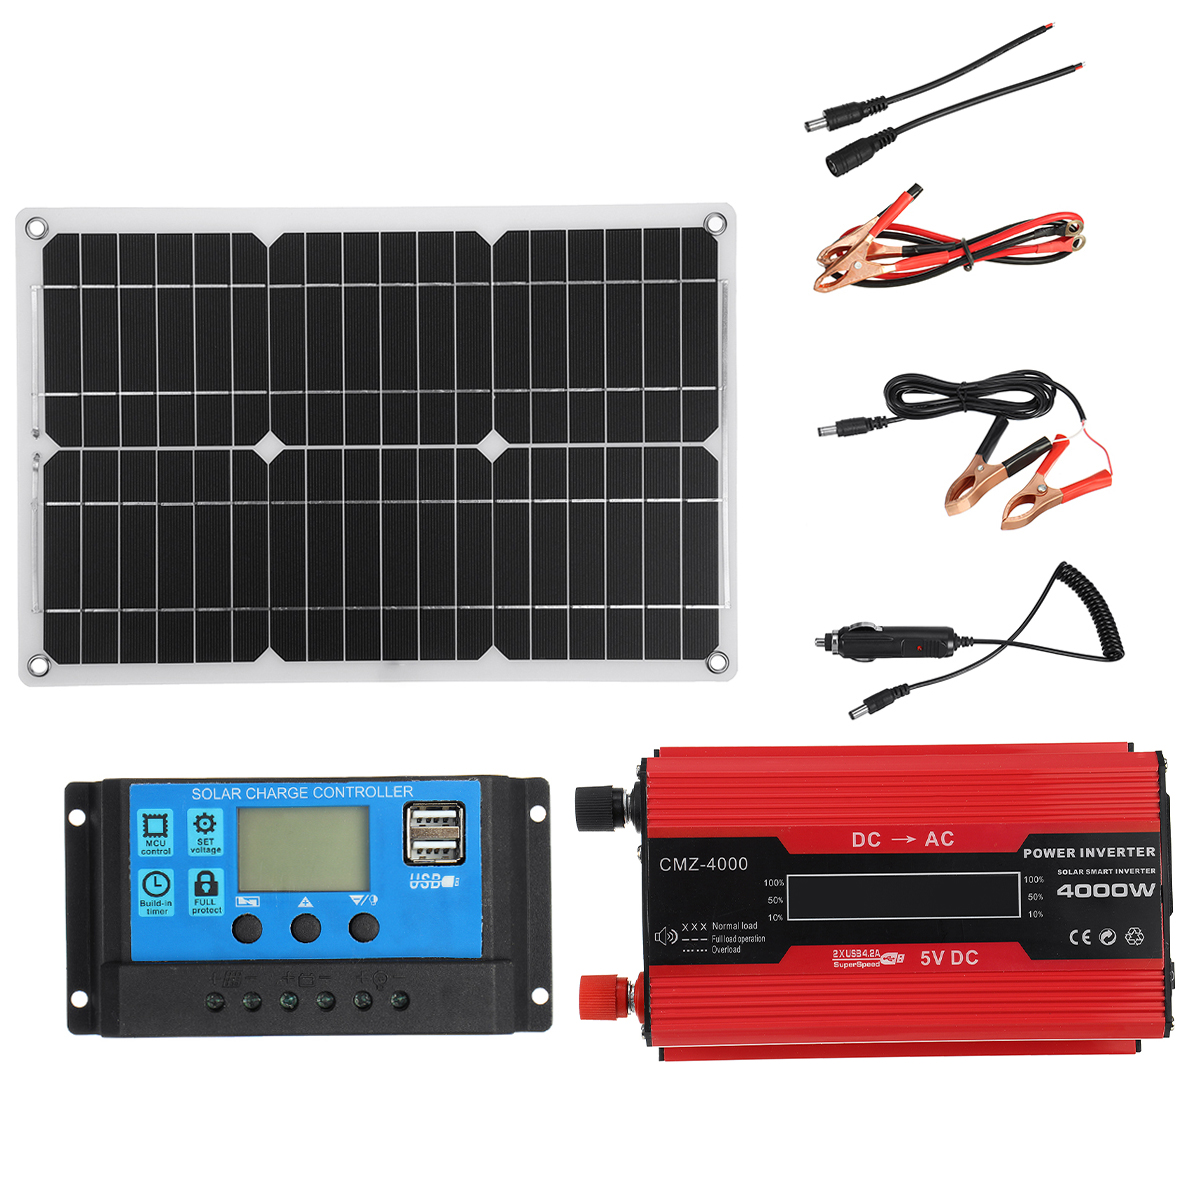 Find Solar Power System Kit 18V Solar Panel 4000W 12V to 110V/220V Inverter 30A 12/24V Charge Controller USB Kit for Sale on Gipsybee.com with cryptocurrencies